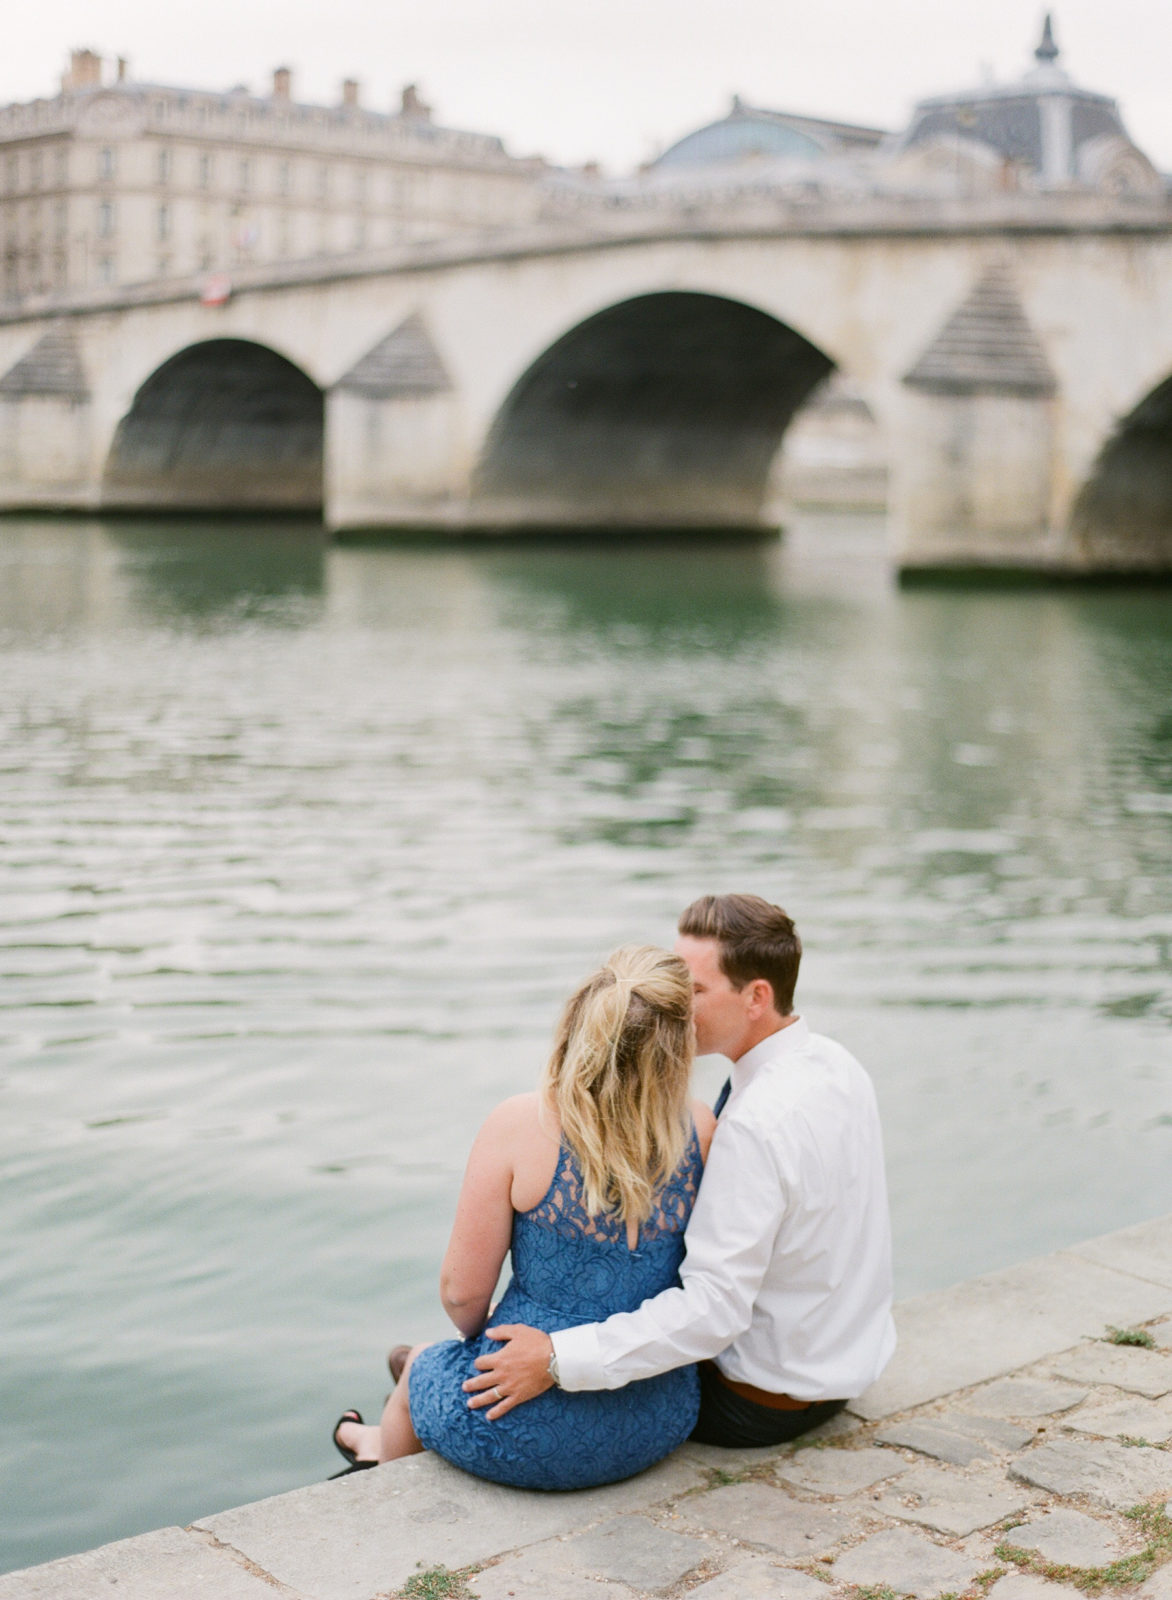 Paris Honeymoon Photographer | France Wedding Photographer | Paris Film Photography | Molly Carr Photography | Sunrise At Le Louvre | Louvre Glass Pyramid